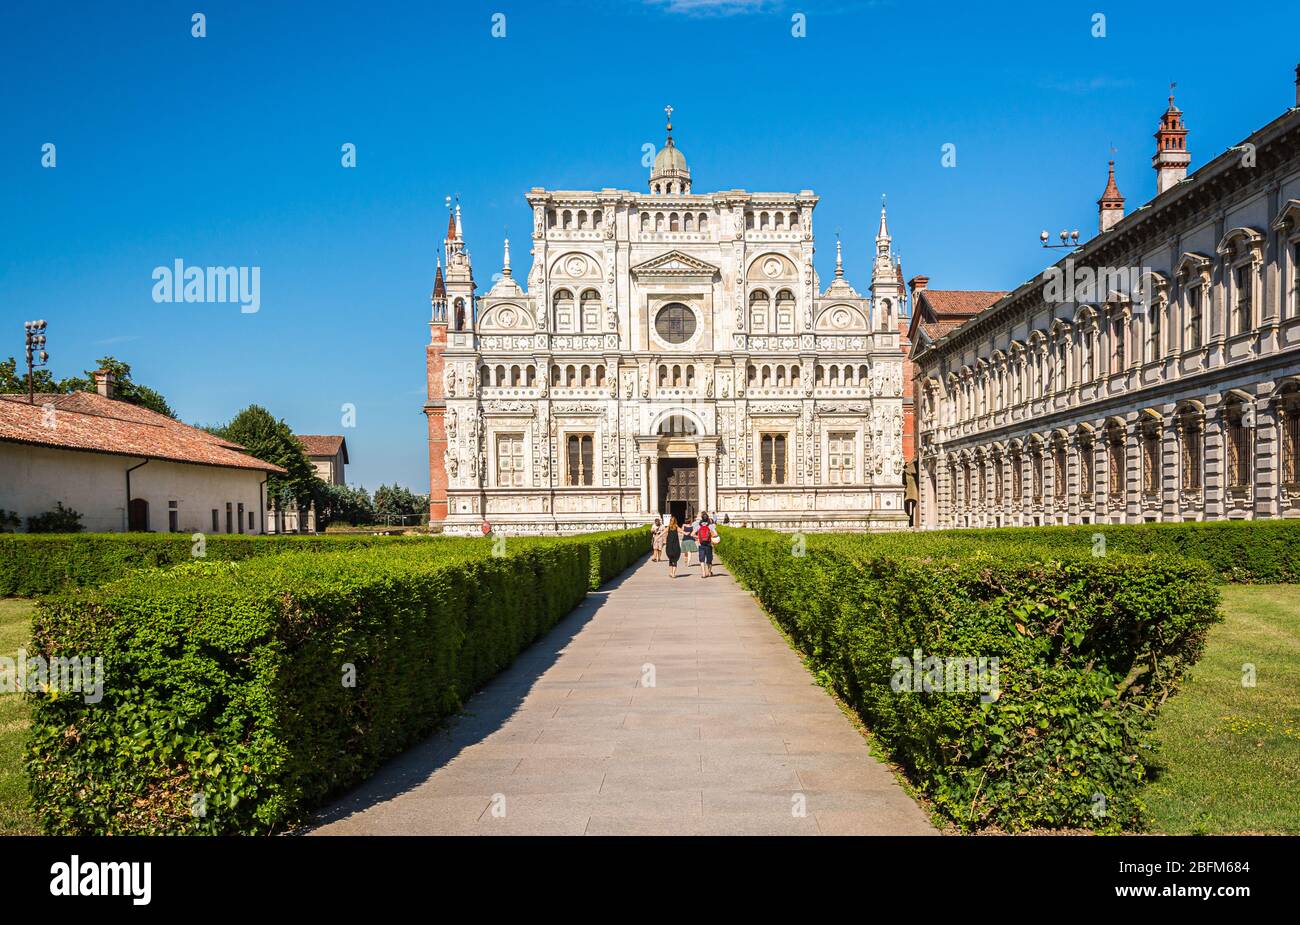 Abbey church, Certosa di Pavia monastery, Lombardy, Italy. View of the Facade. Pavia, northern Italy, june 28, 2015 Stock Photo